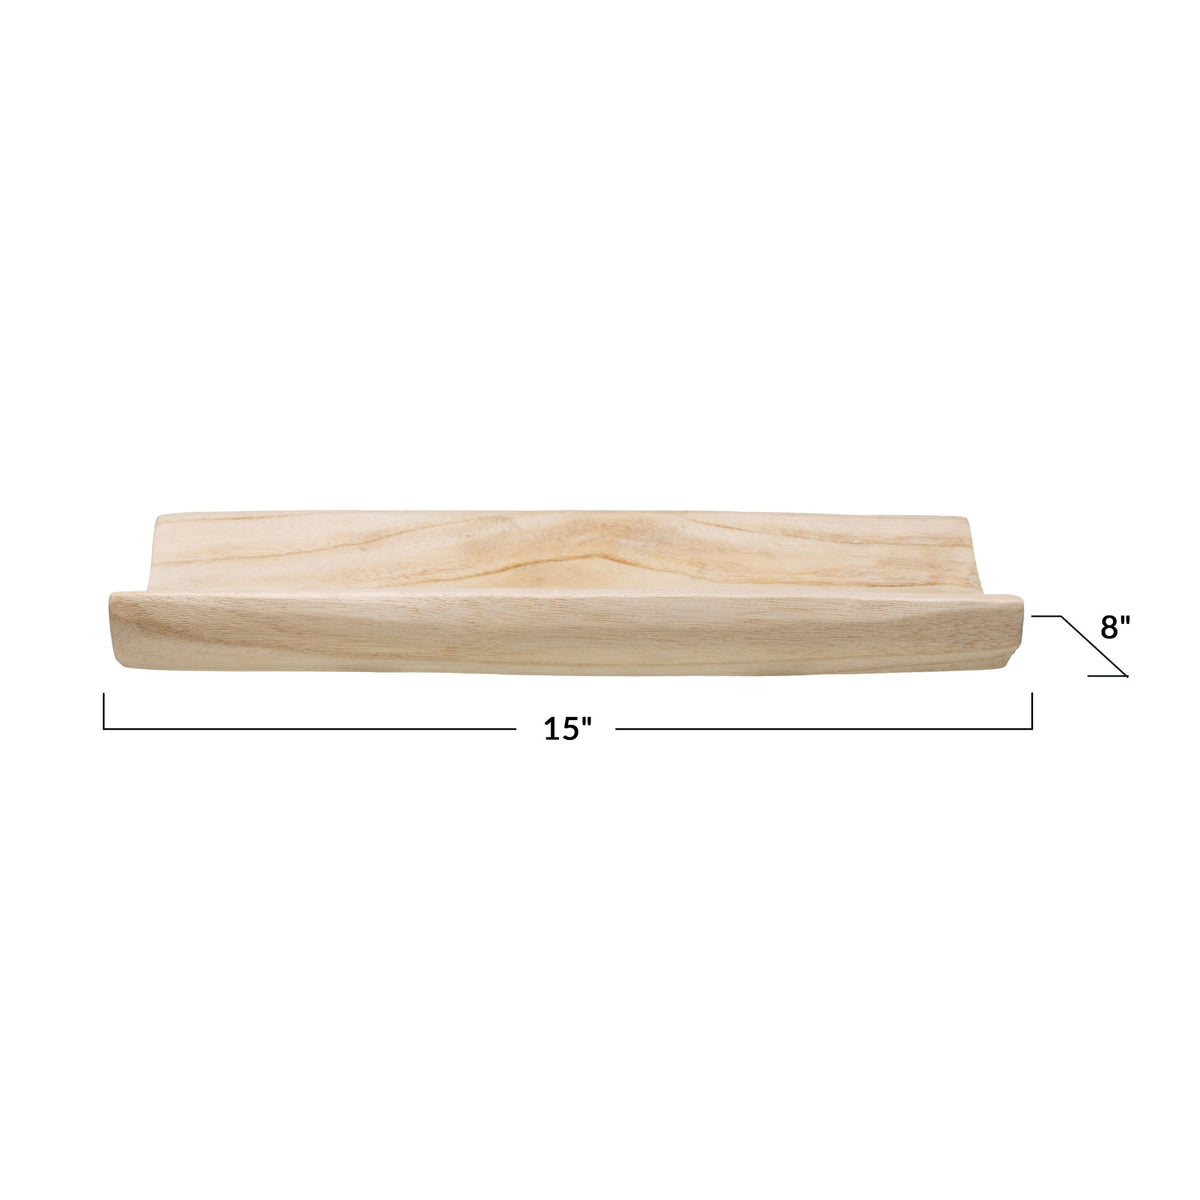 Rectangular large paulownia wood cuting board Big size for home use.